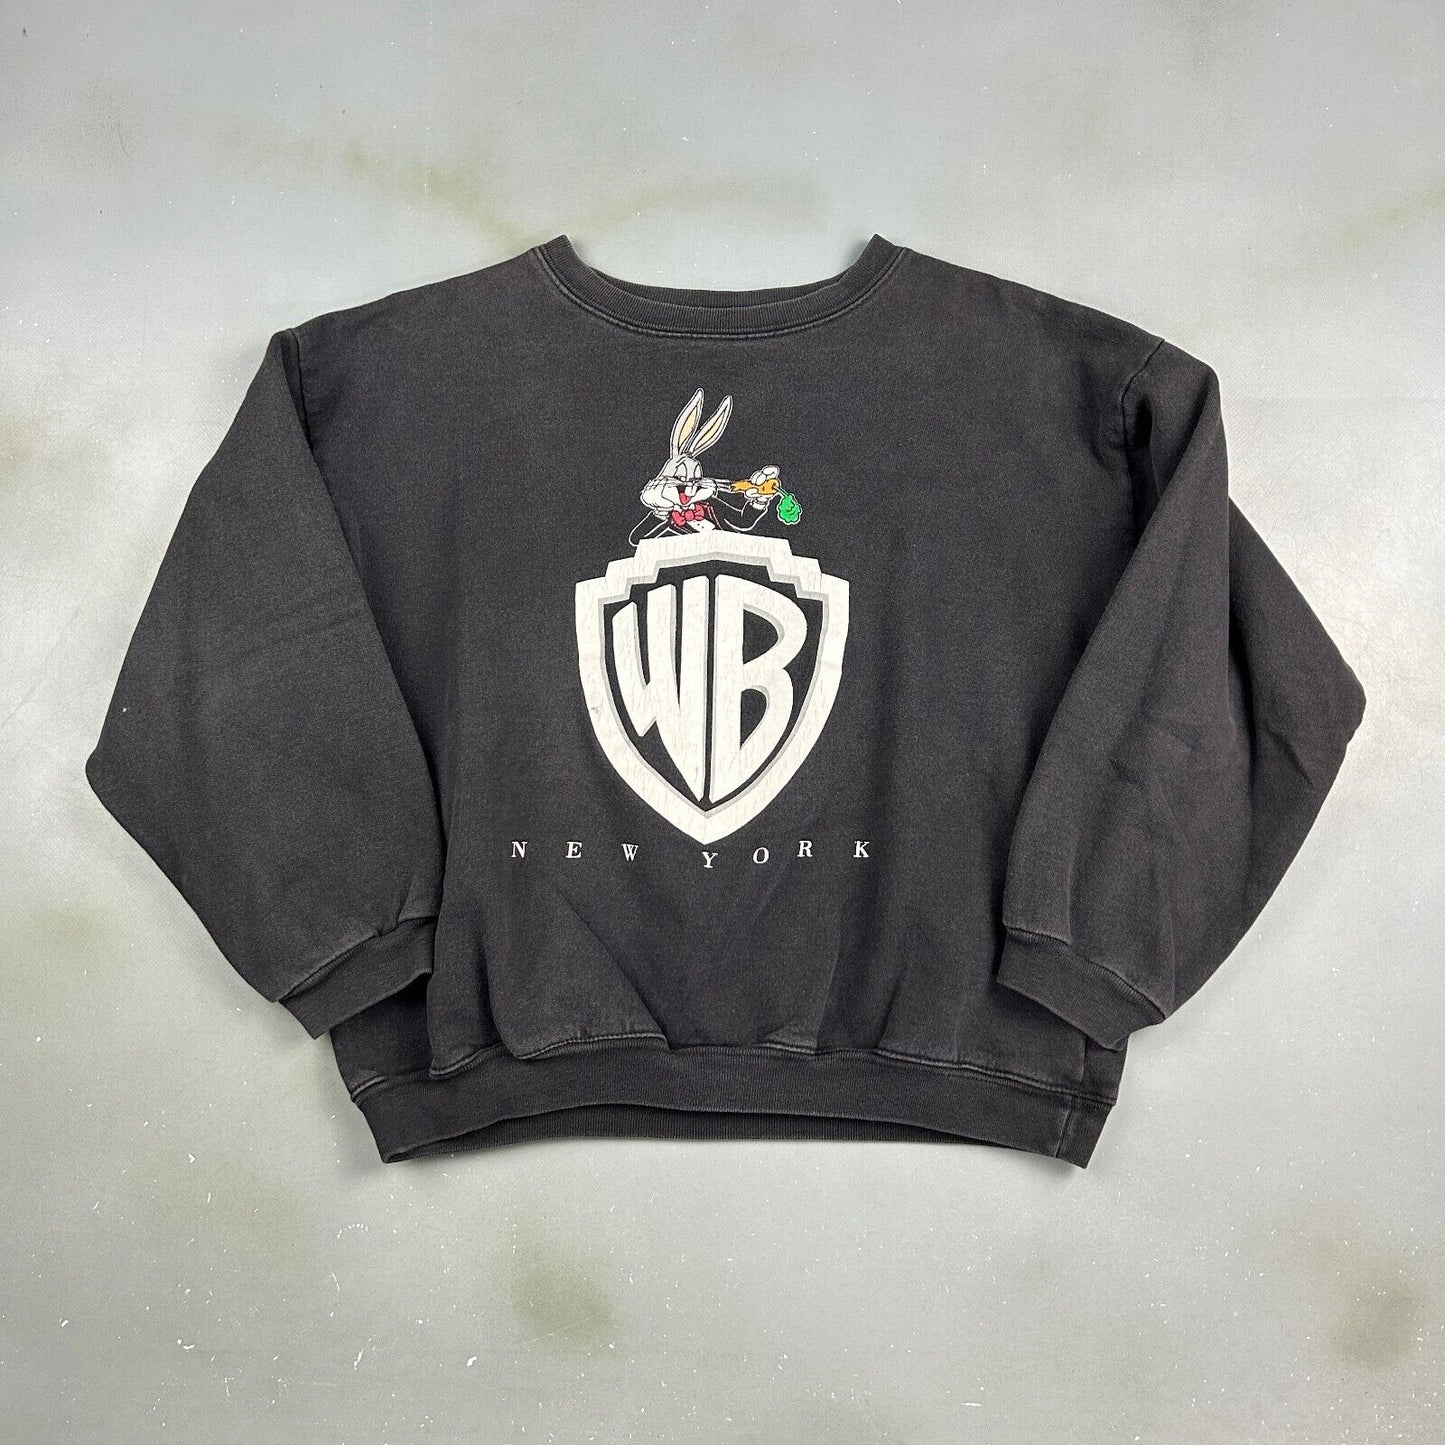 VINTAGE 90s Bugs Bunny Warner Bros New York Faded Crewneck Sweater sz XS Adult